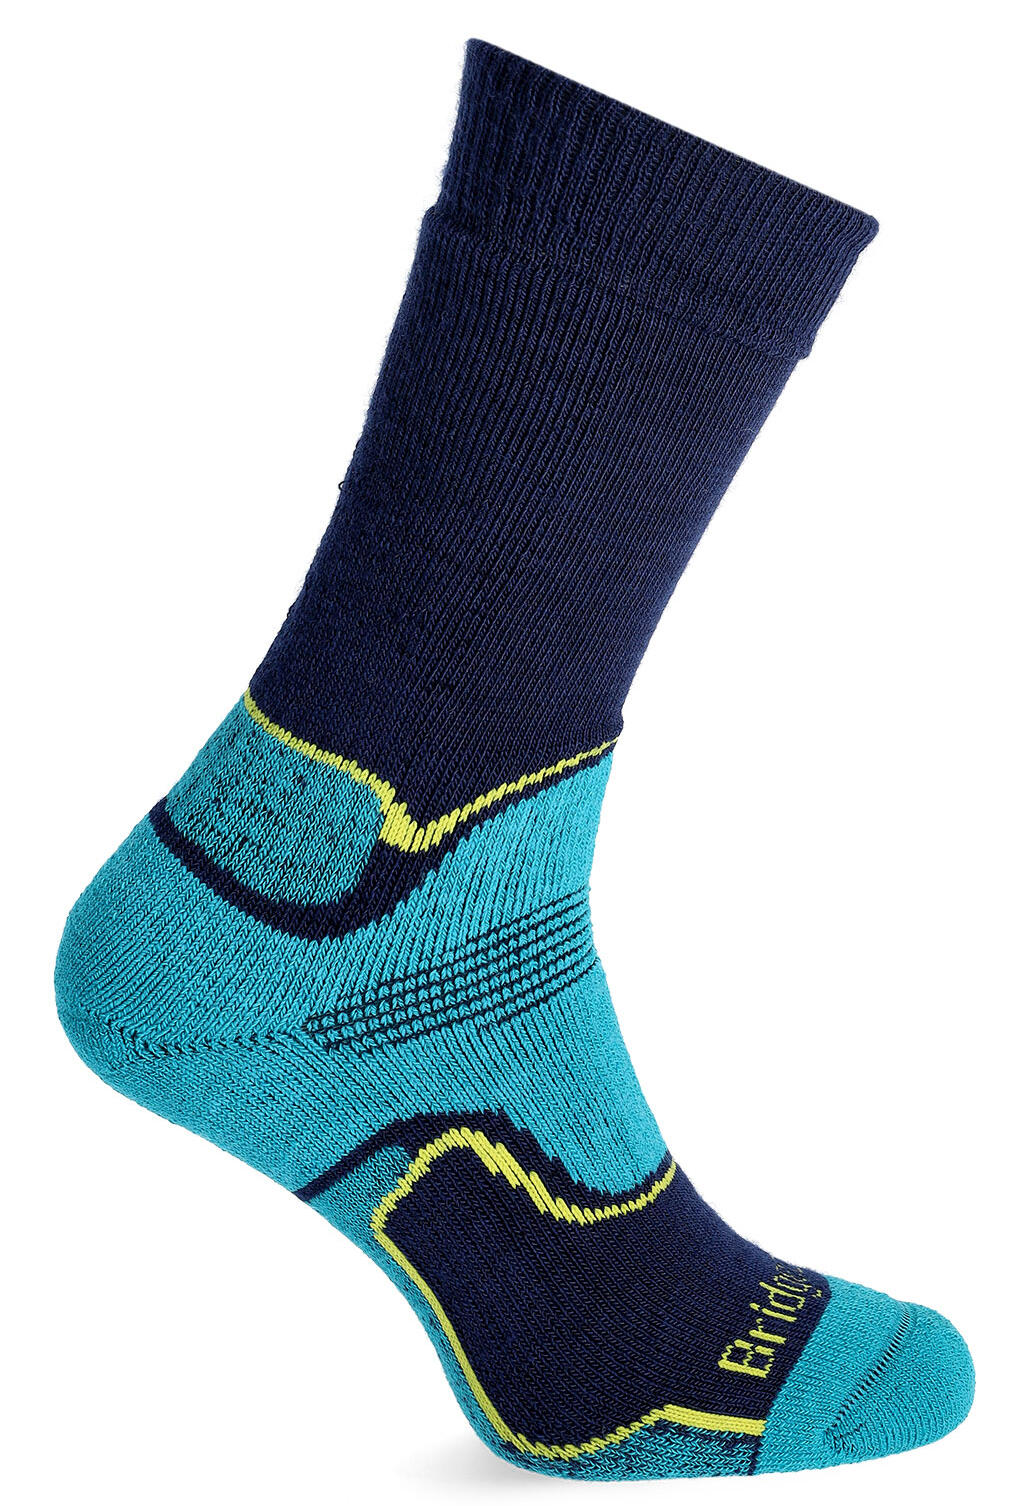 Mens Hiking Midweight Merino Wool Performance Boot Socks 1/5